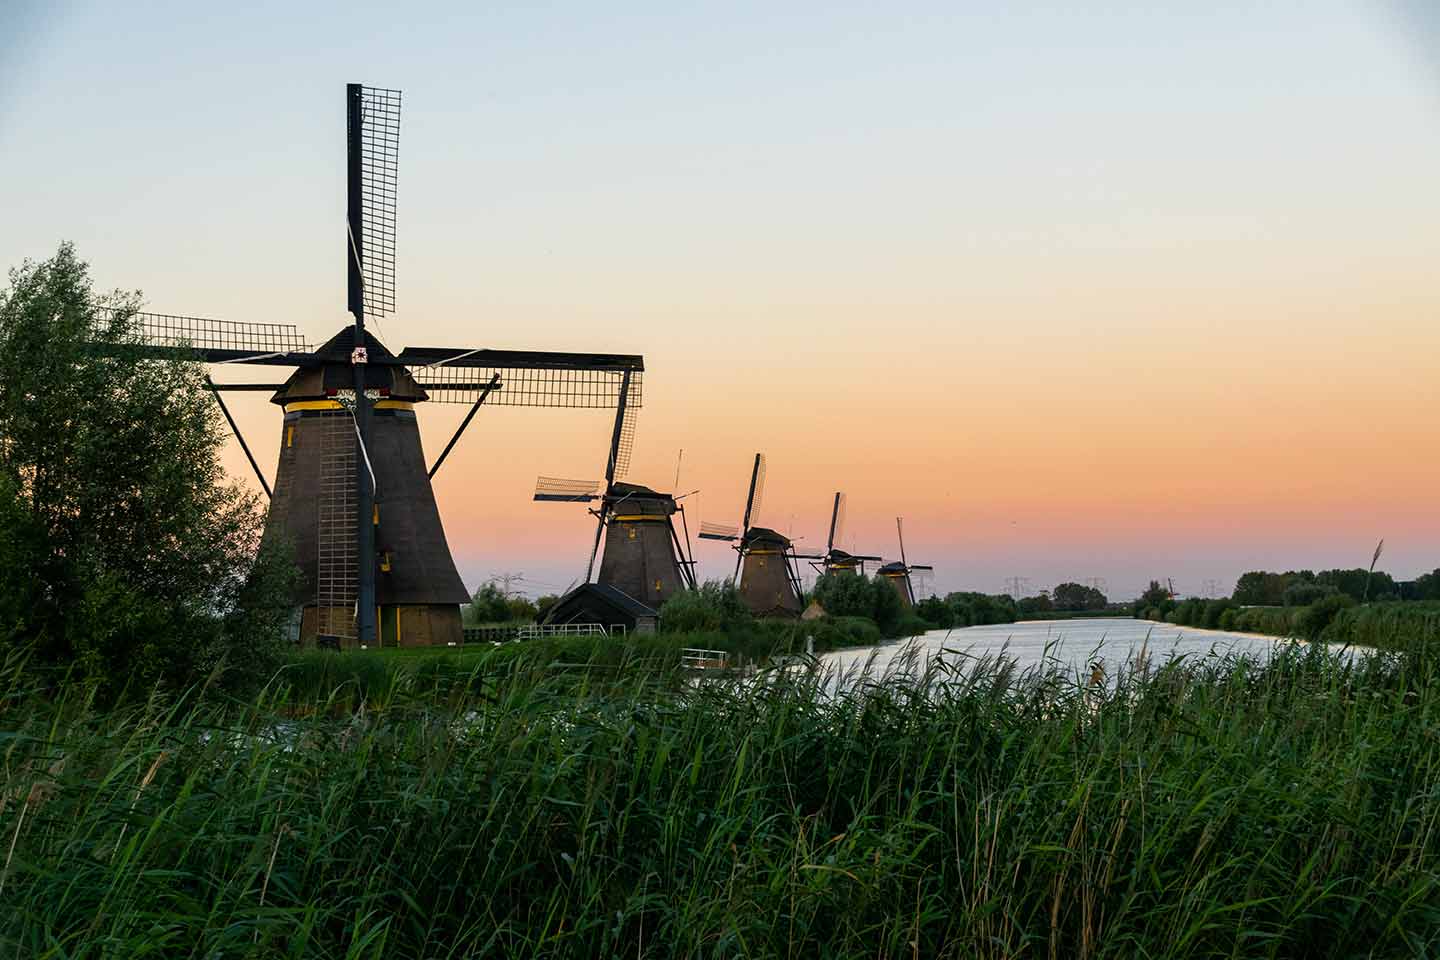 Netherlands - Bill on E-commerce VAT package reform 2021